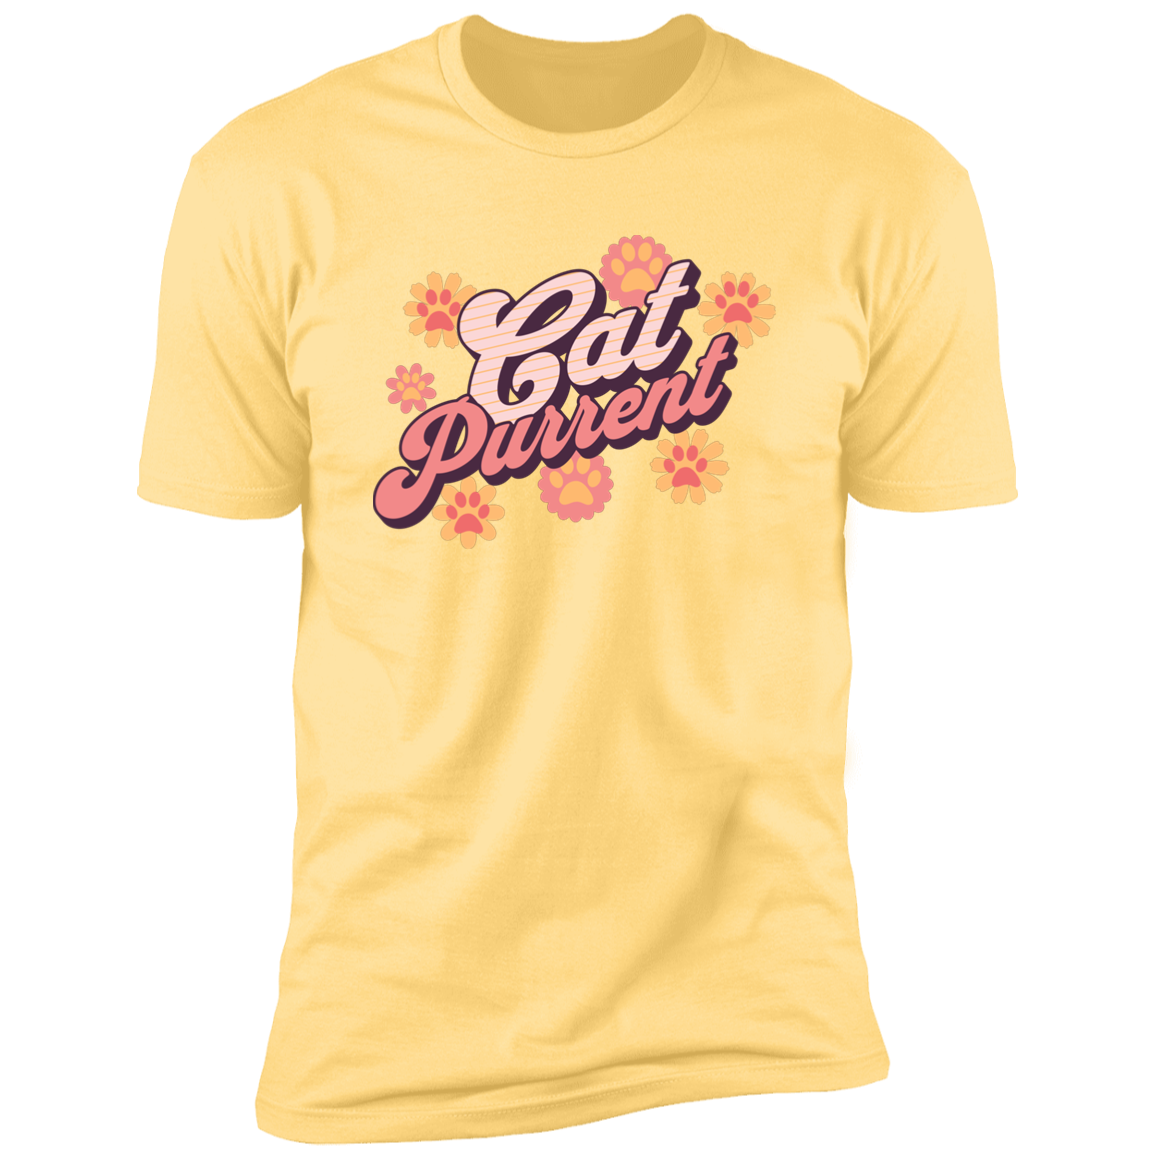 Cat Purrent Retro T-shirt, Cat Parent Shirt for humans, in banana cream